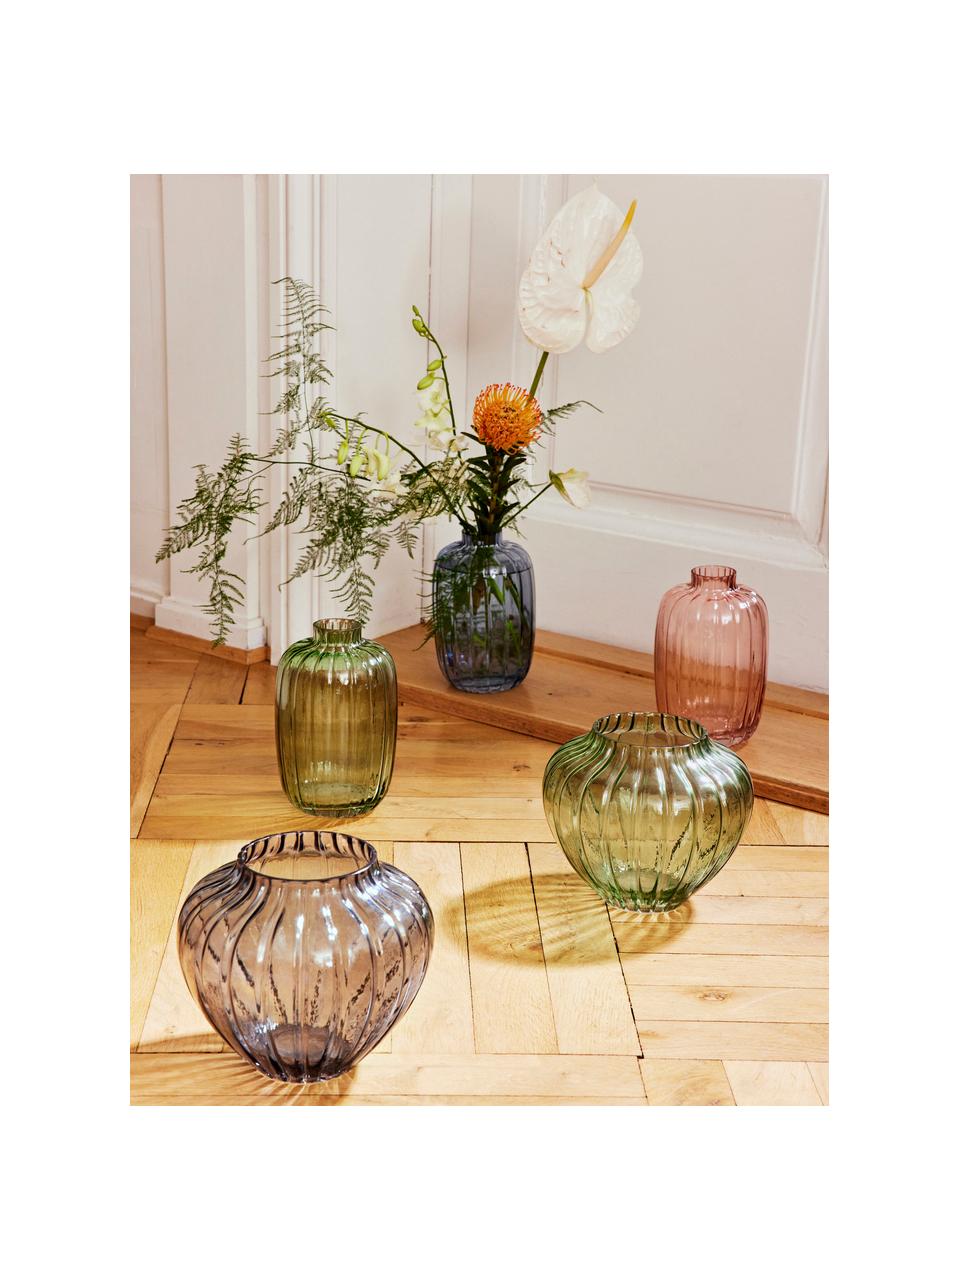 Glas-Vase Groove in Grau, Glas, Grau, Ø 20 x H 18 cm